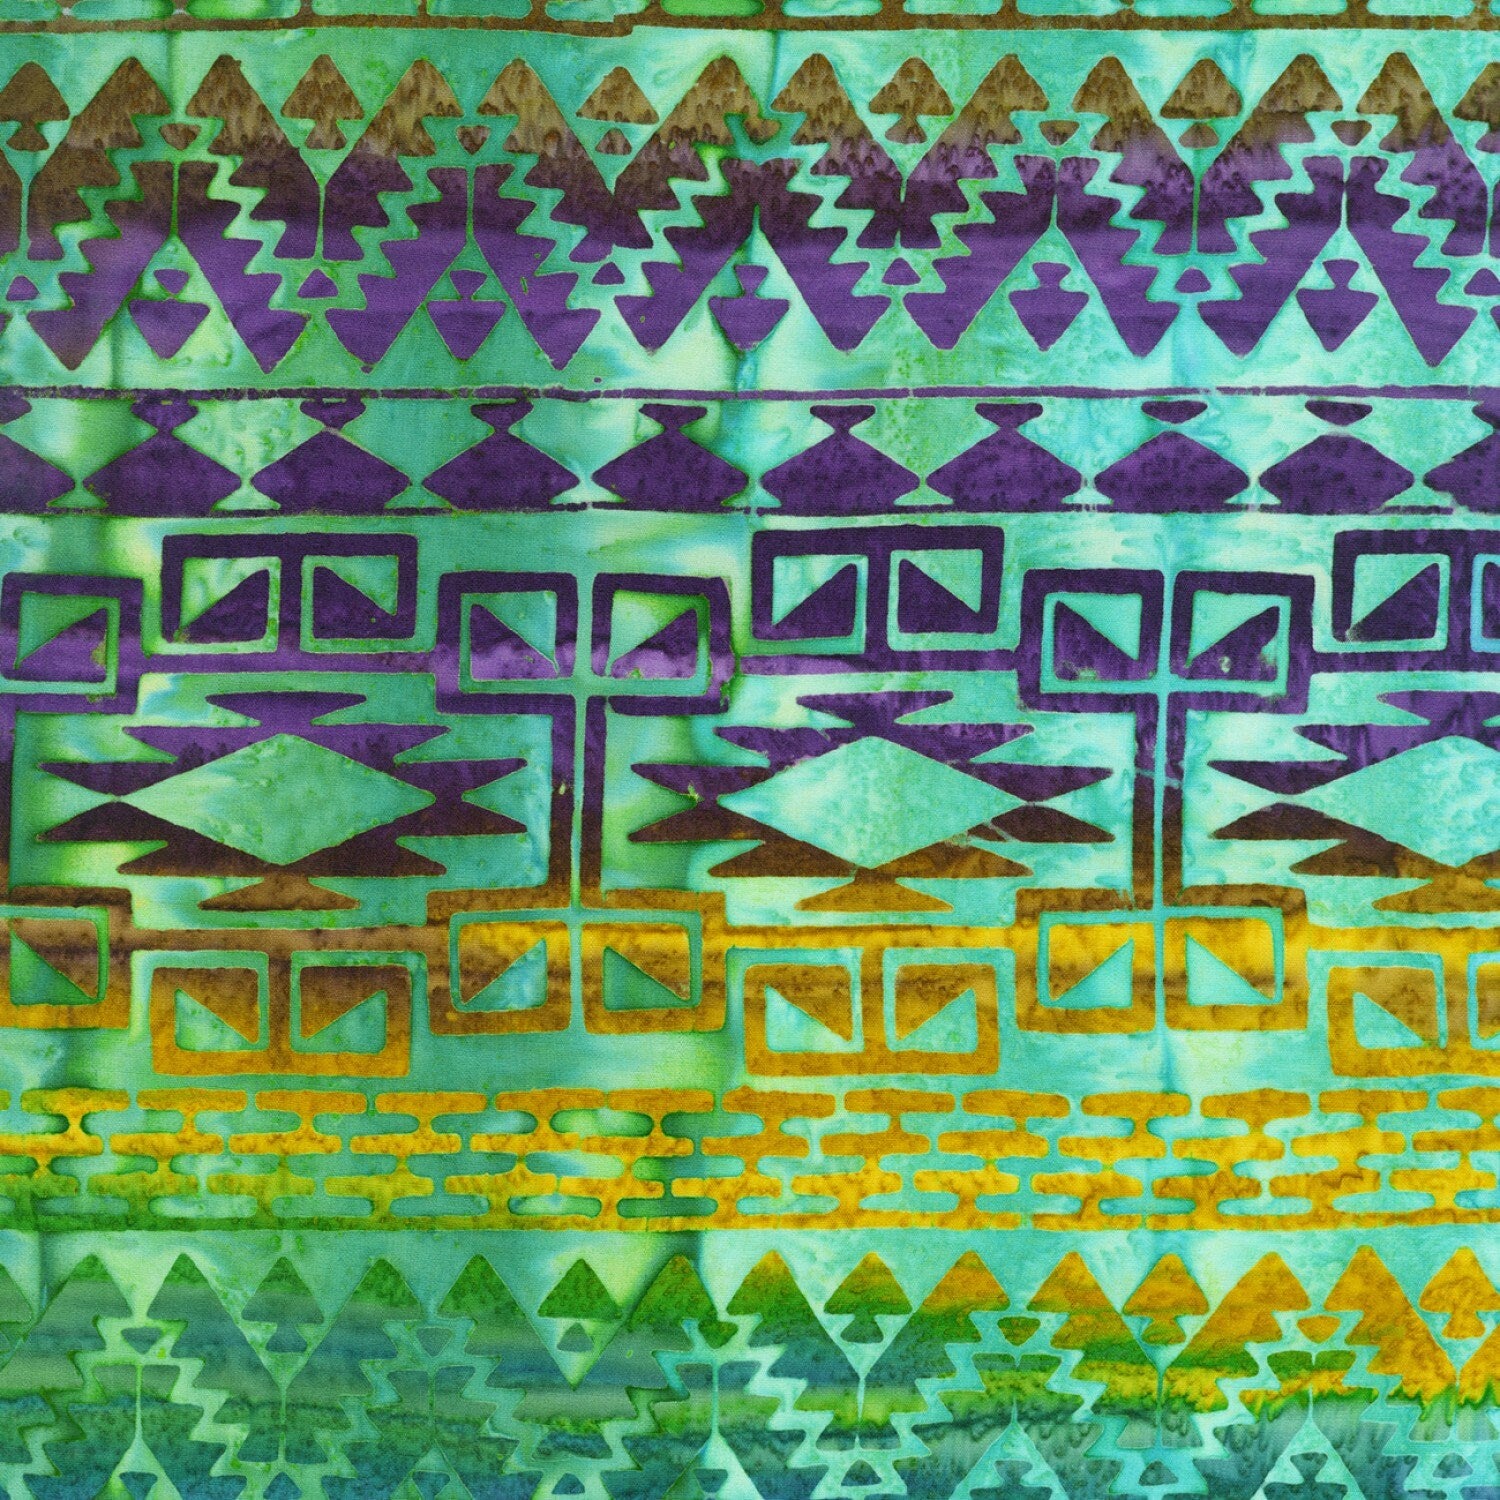 Artisan Batiks Desertscapes Charm Squares, Robert Kaufman CHS-972-42, 5" Precut Purple Teal Rust Batik Fabric Squares